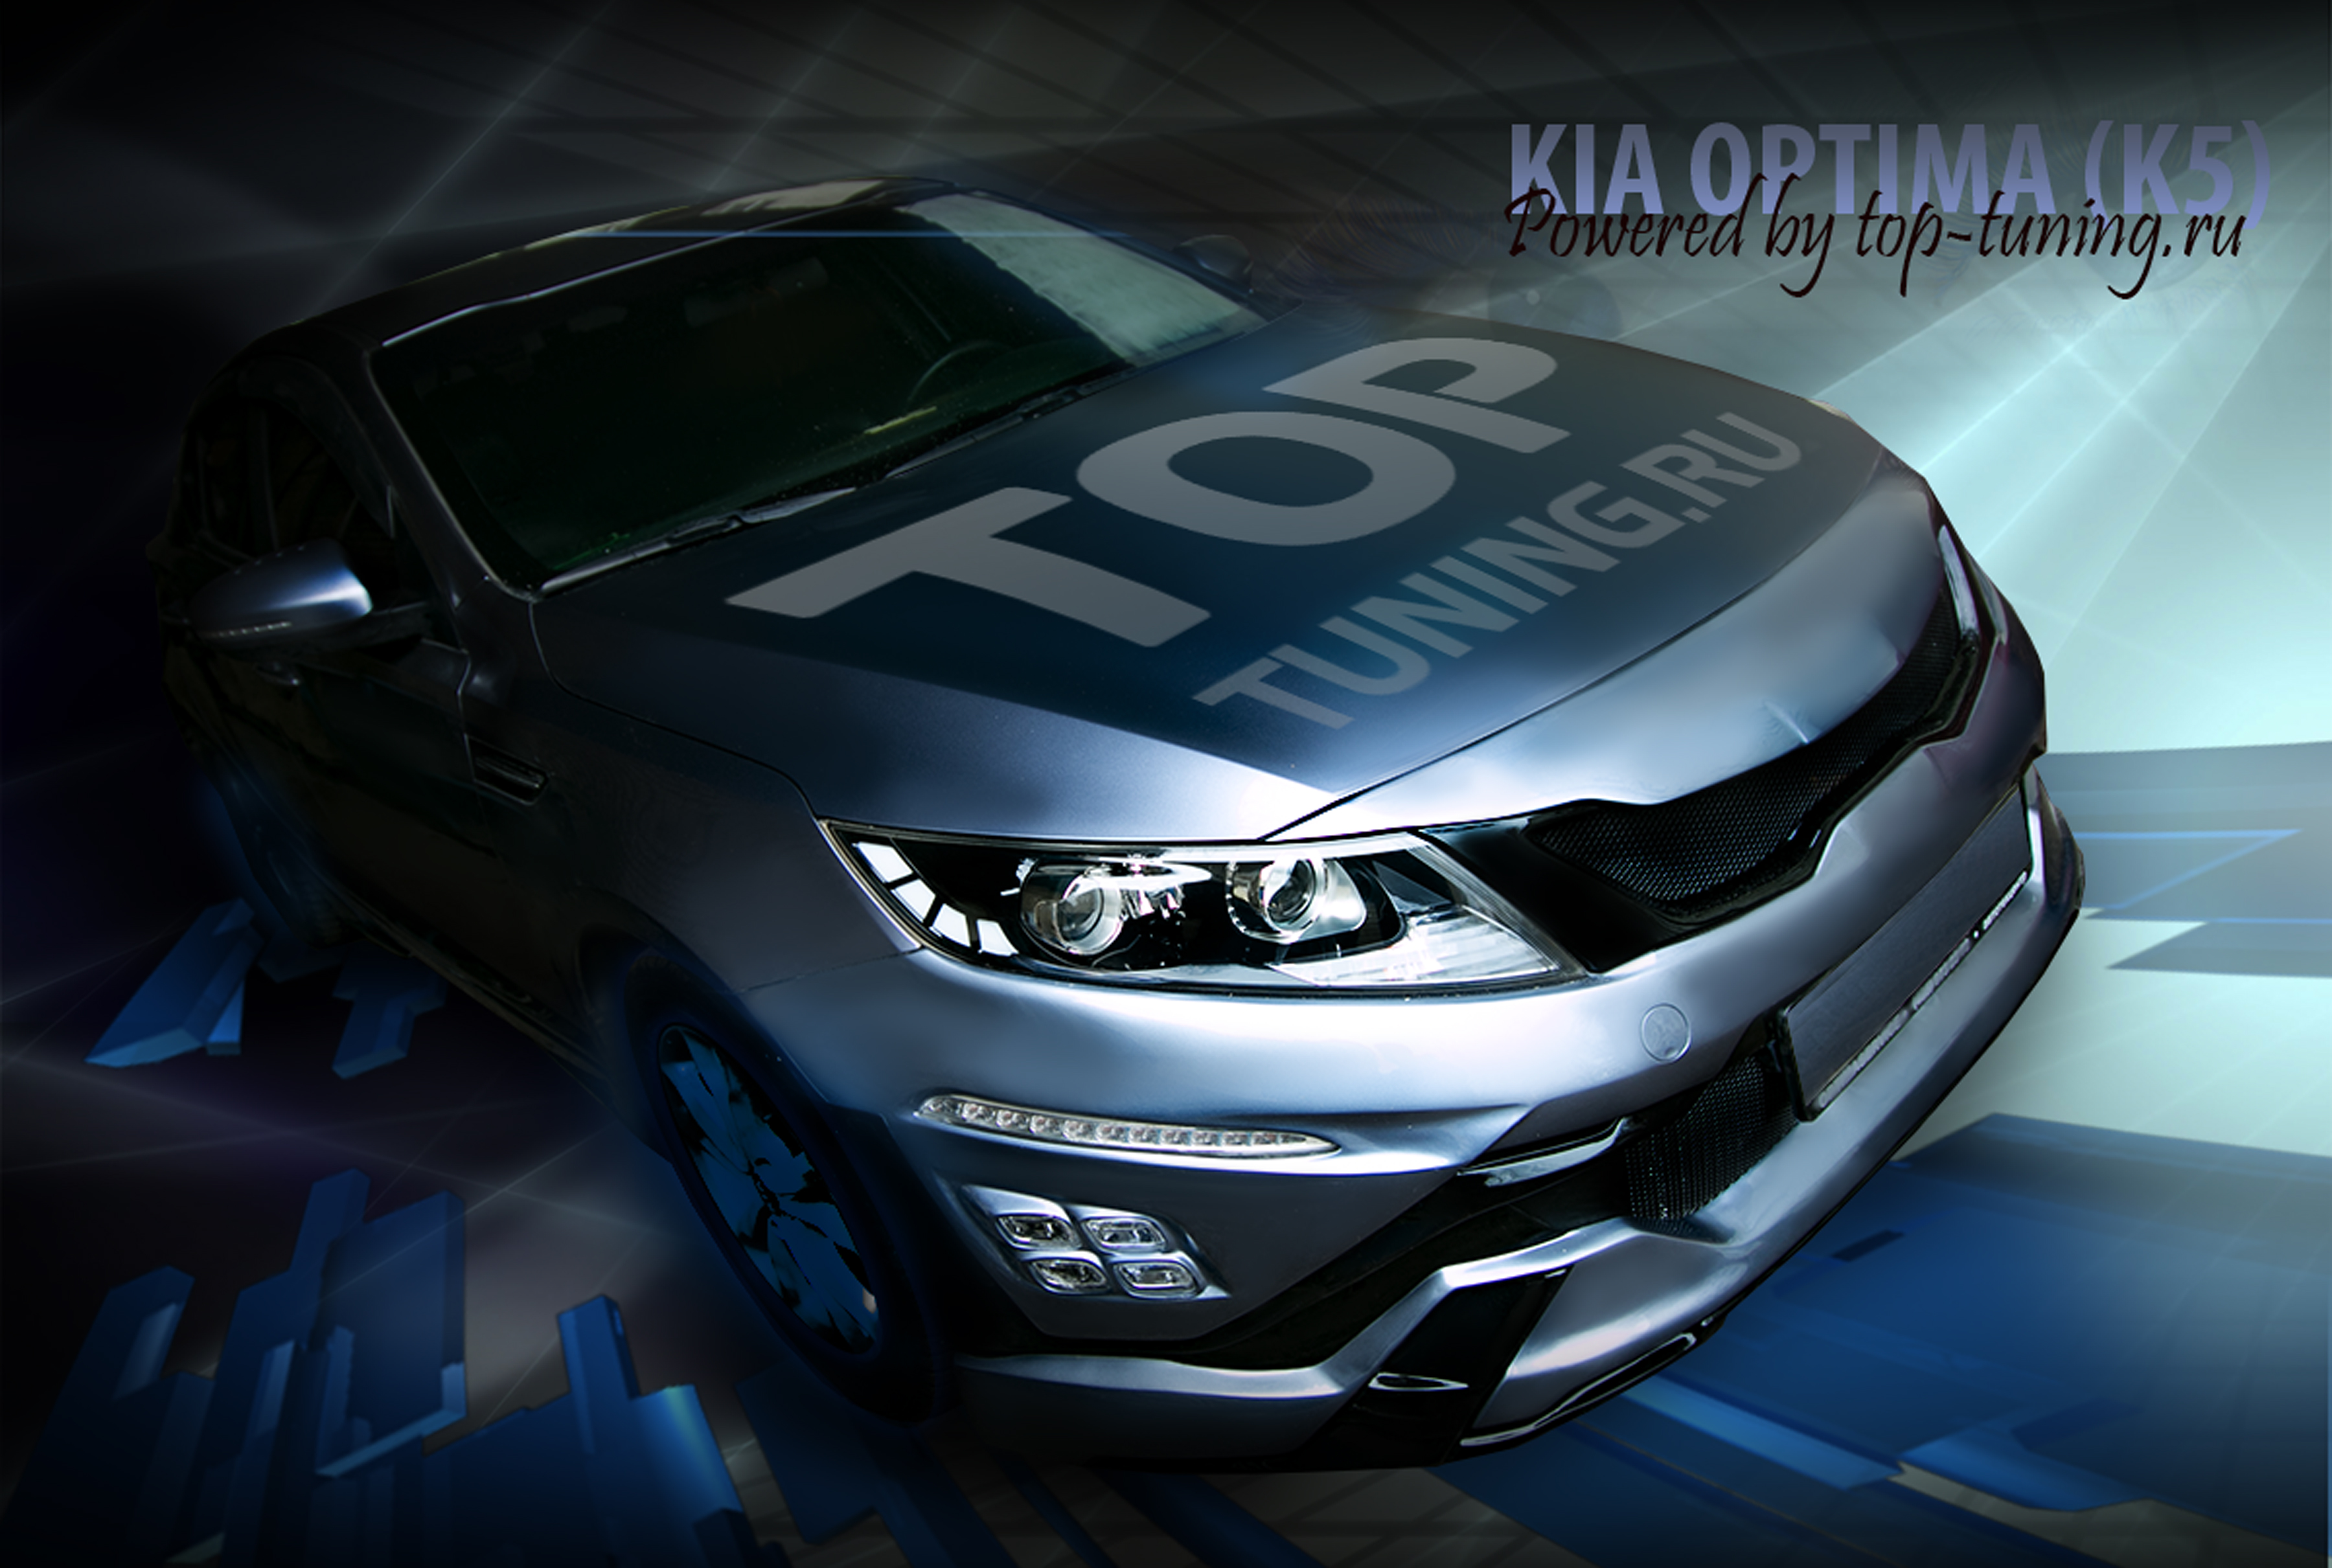 Kia Optima K5 - powered by TOP TUNING